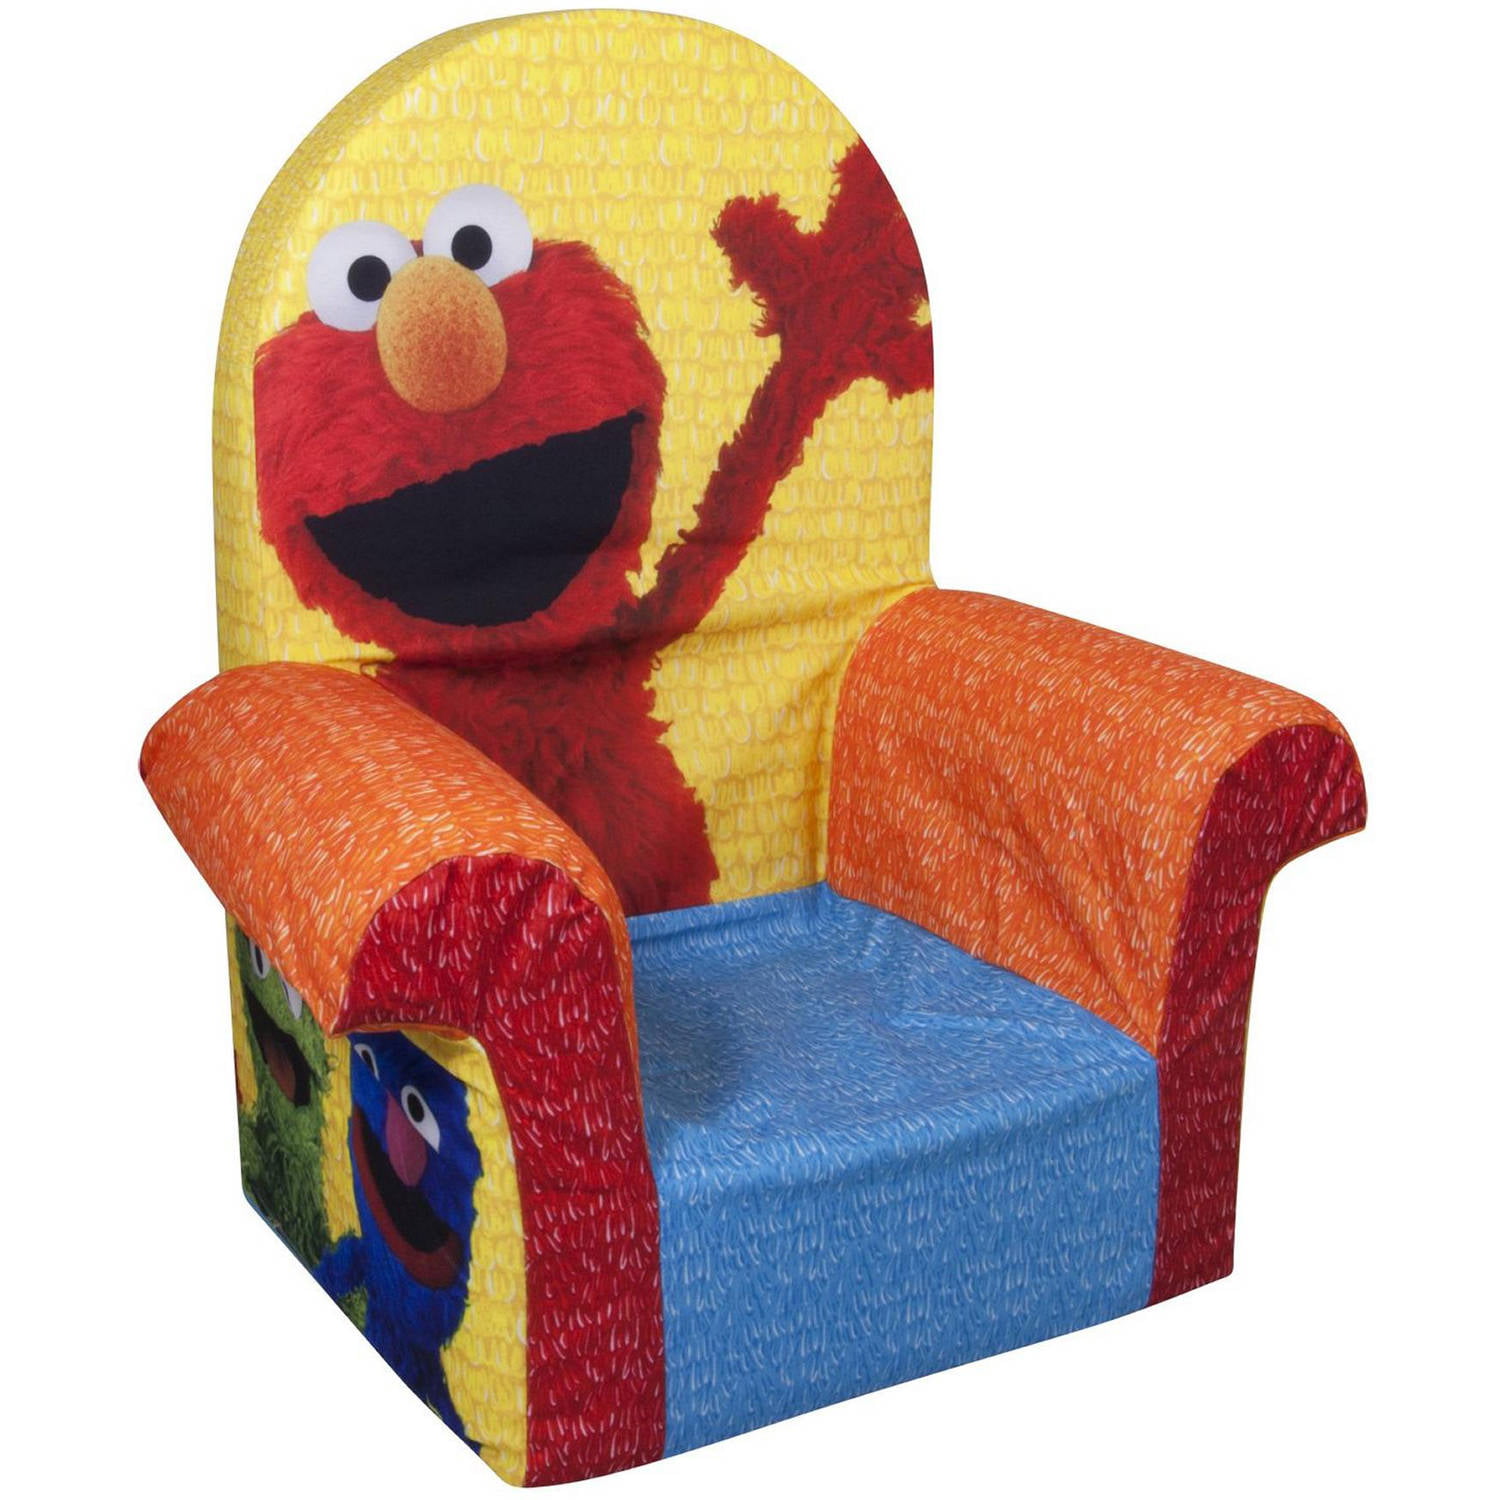 children's character chairs